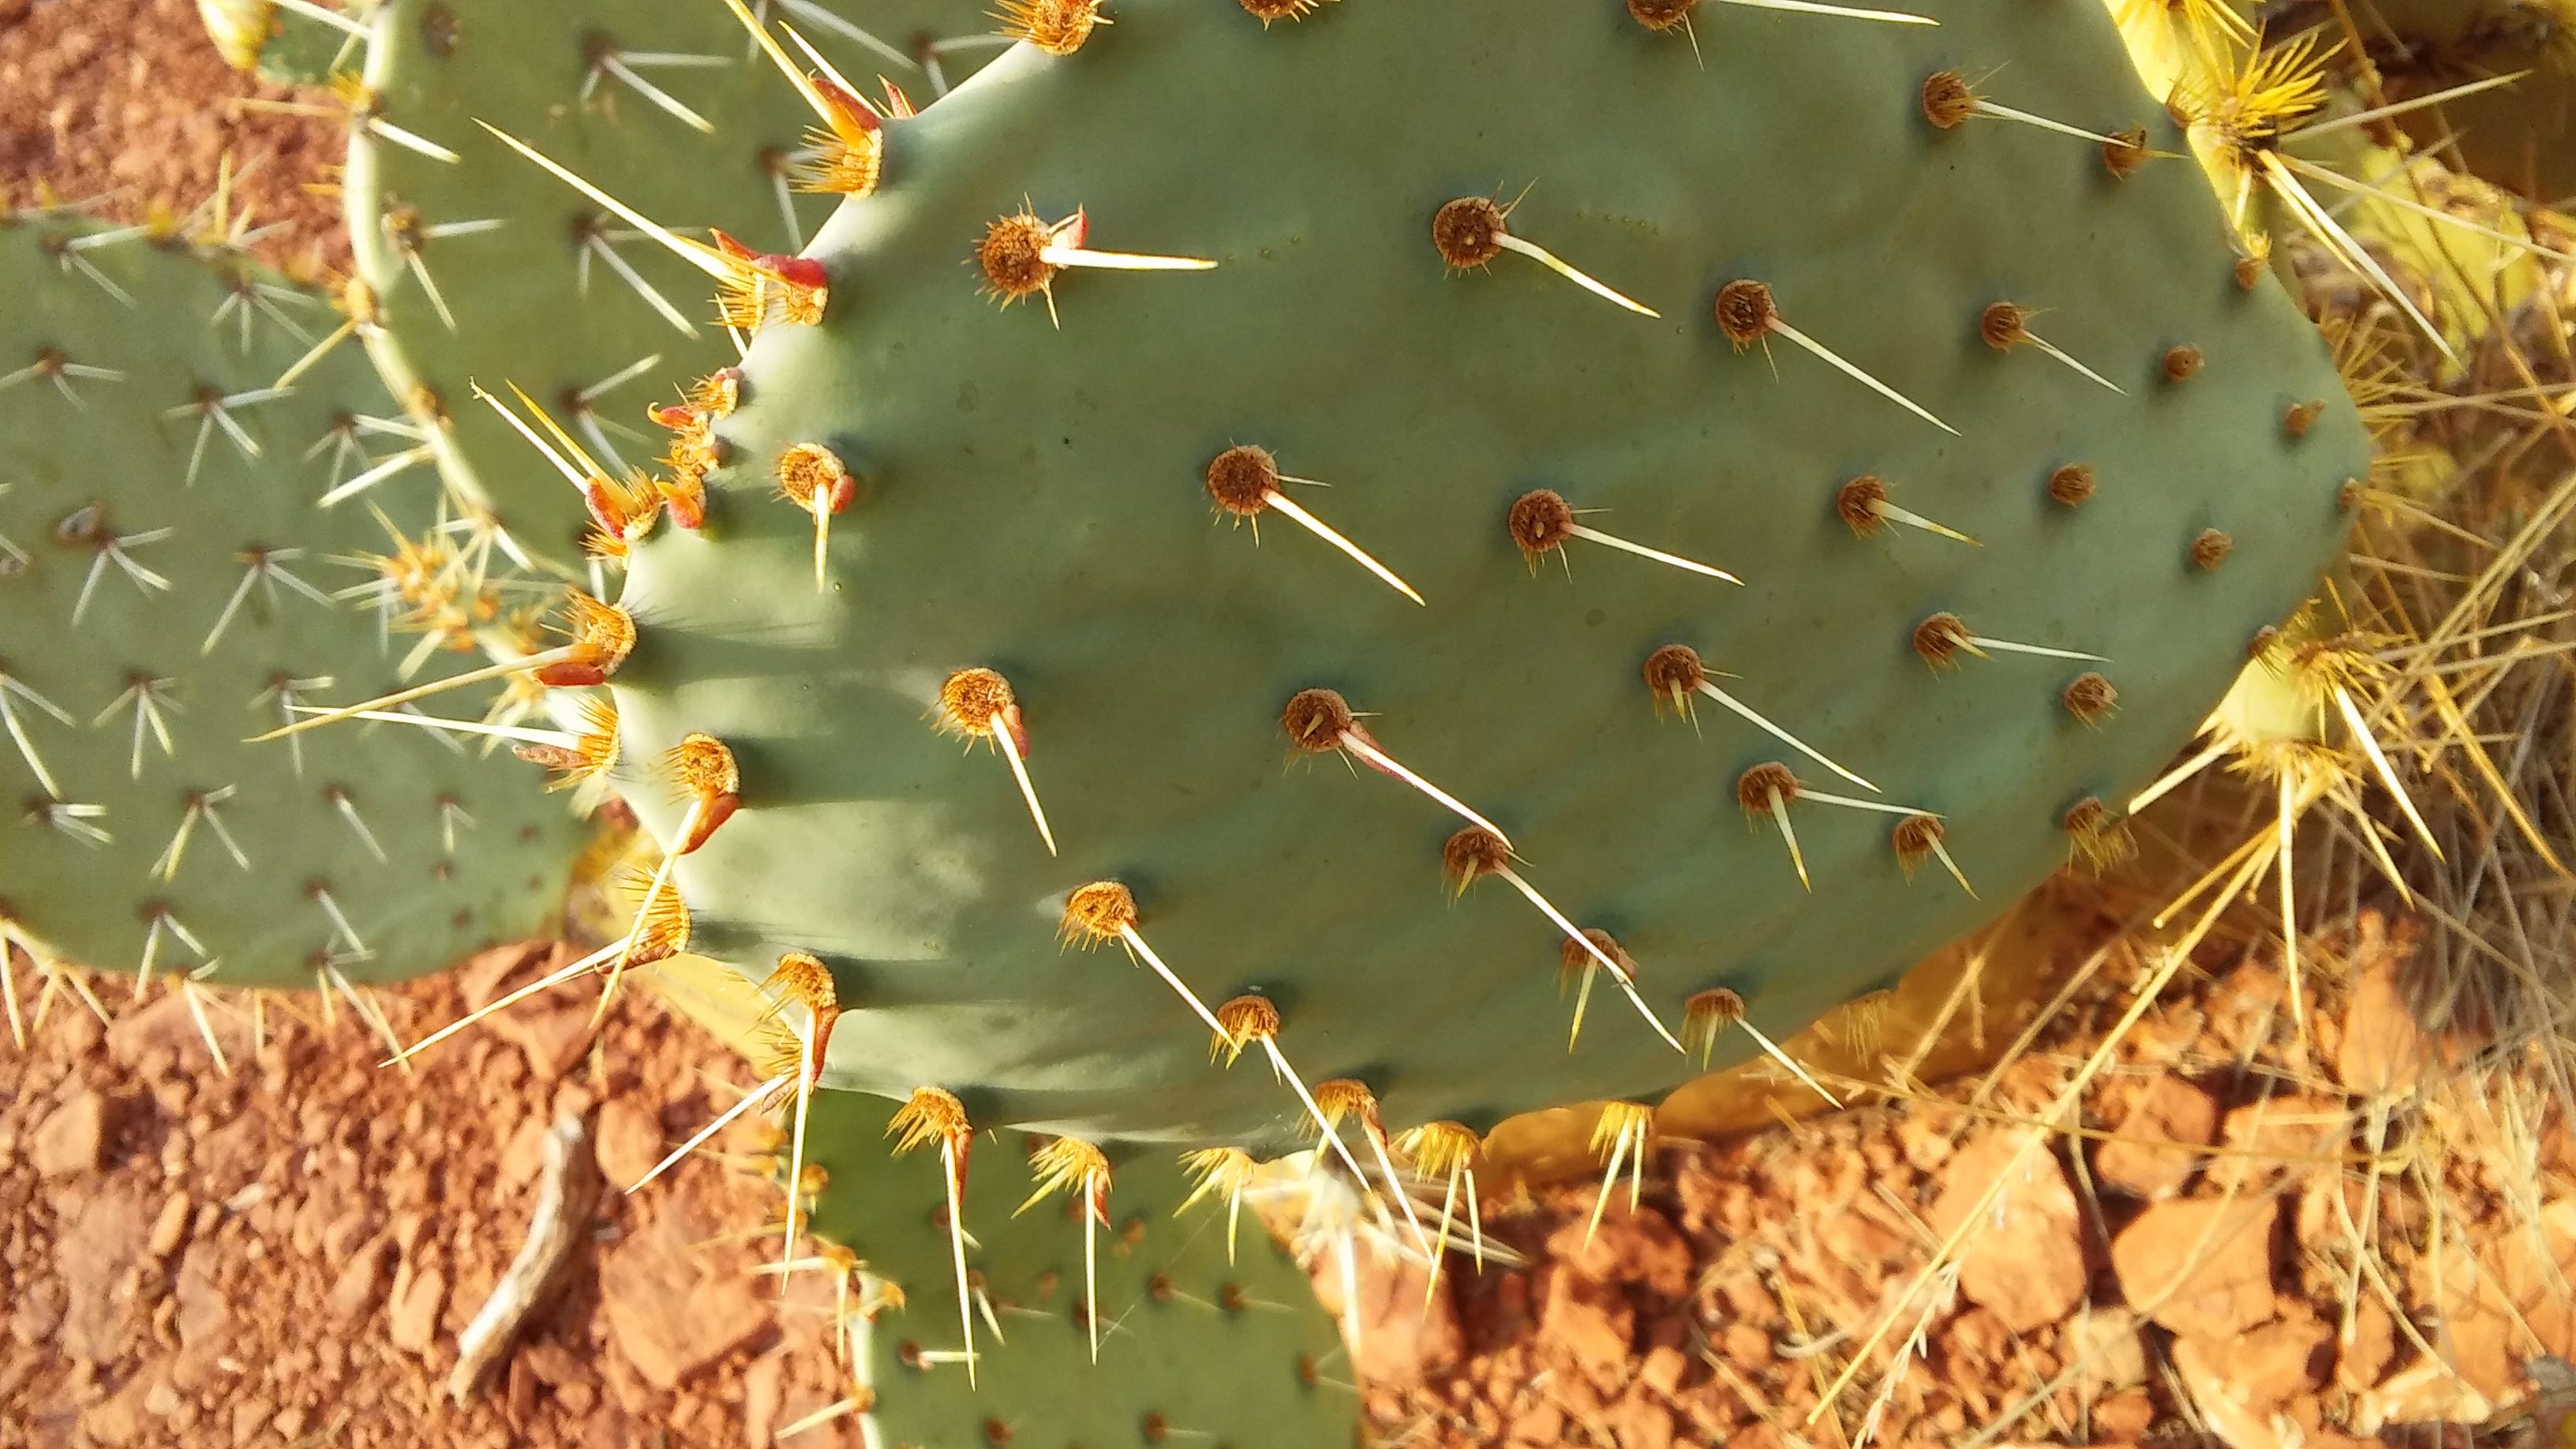 Cactus sedona trip.jpg